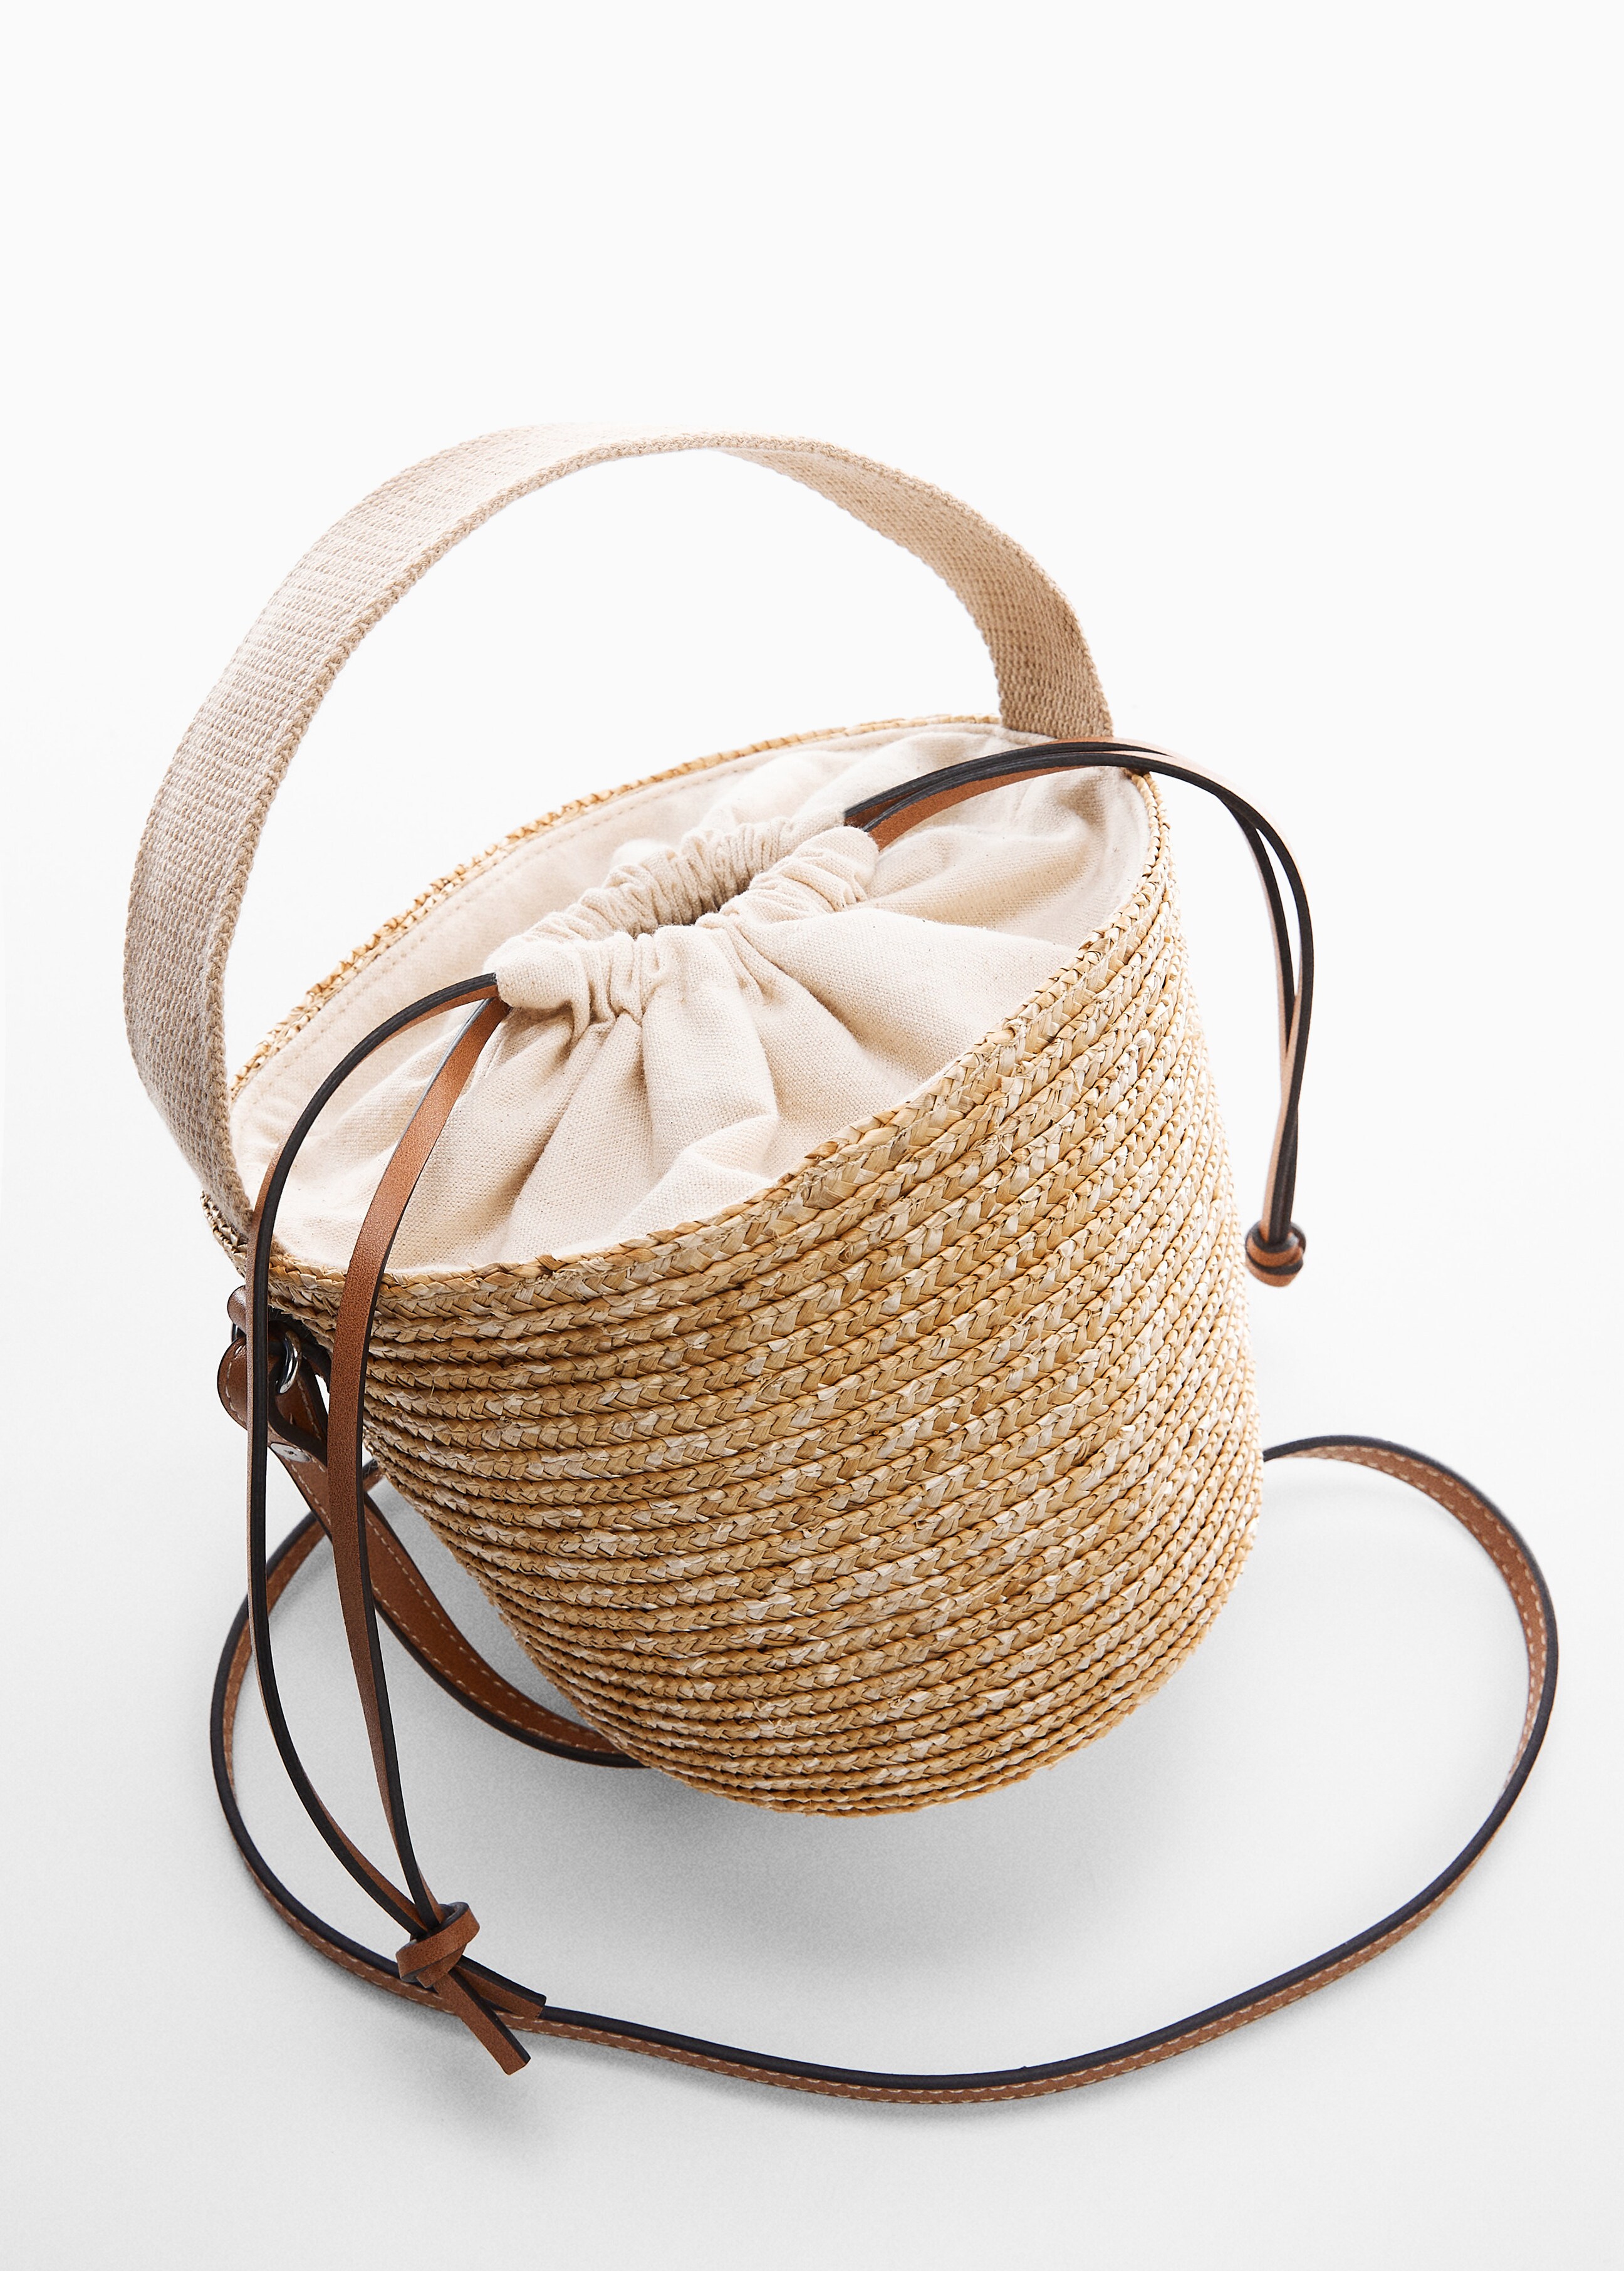 Natural fibre sack bag - Details of the article 5